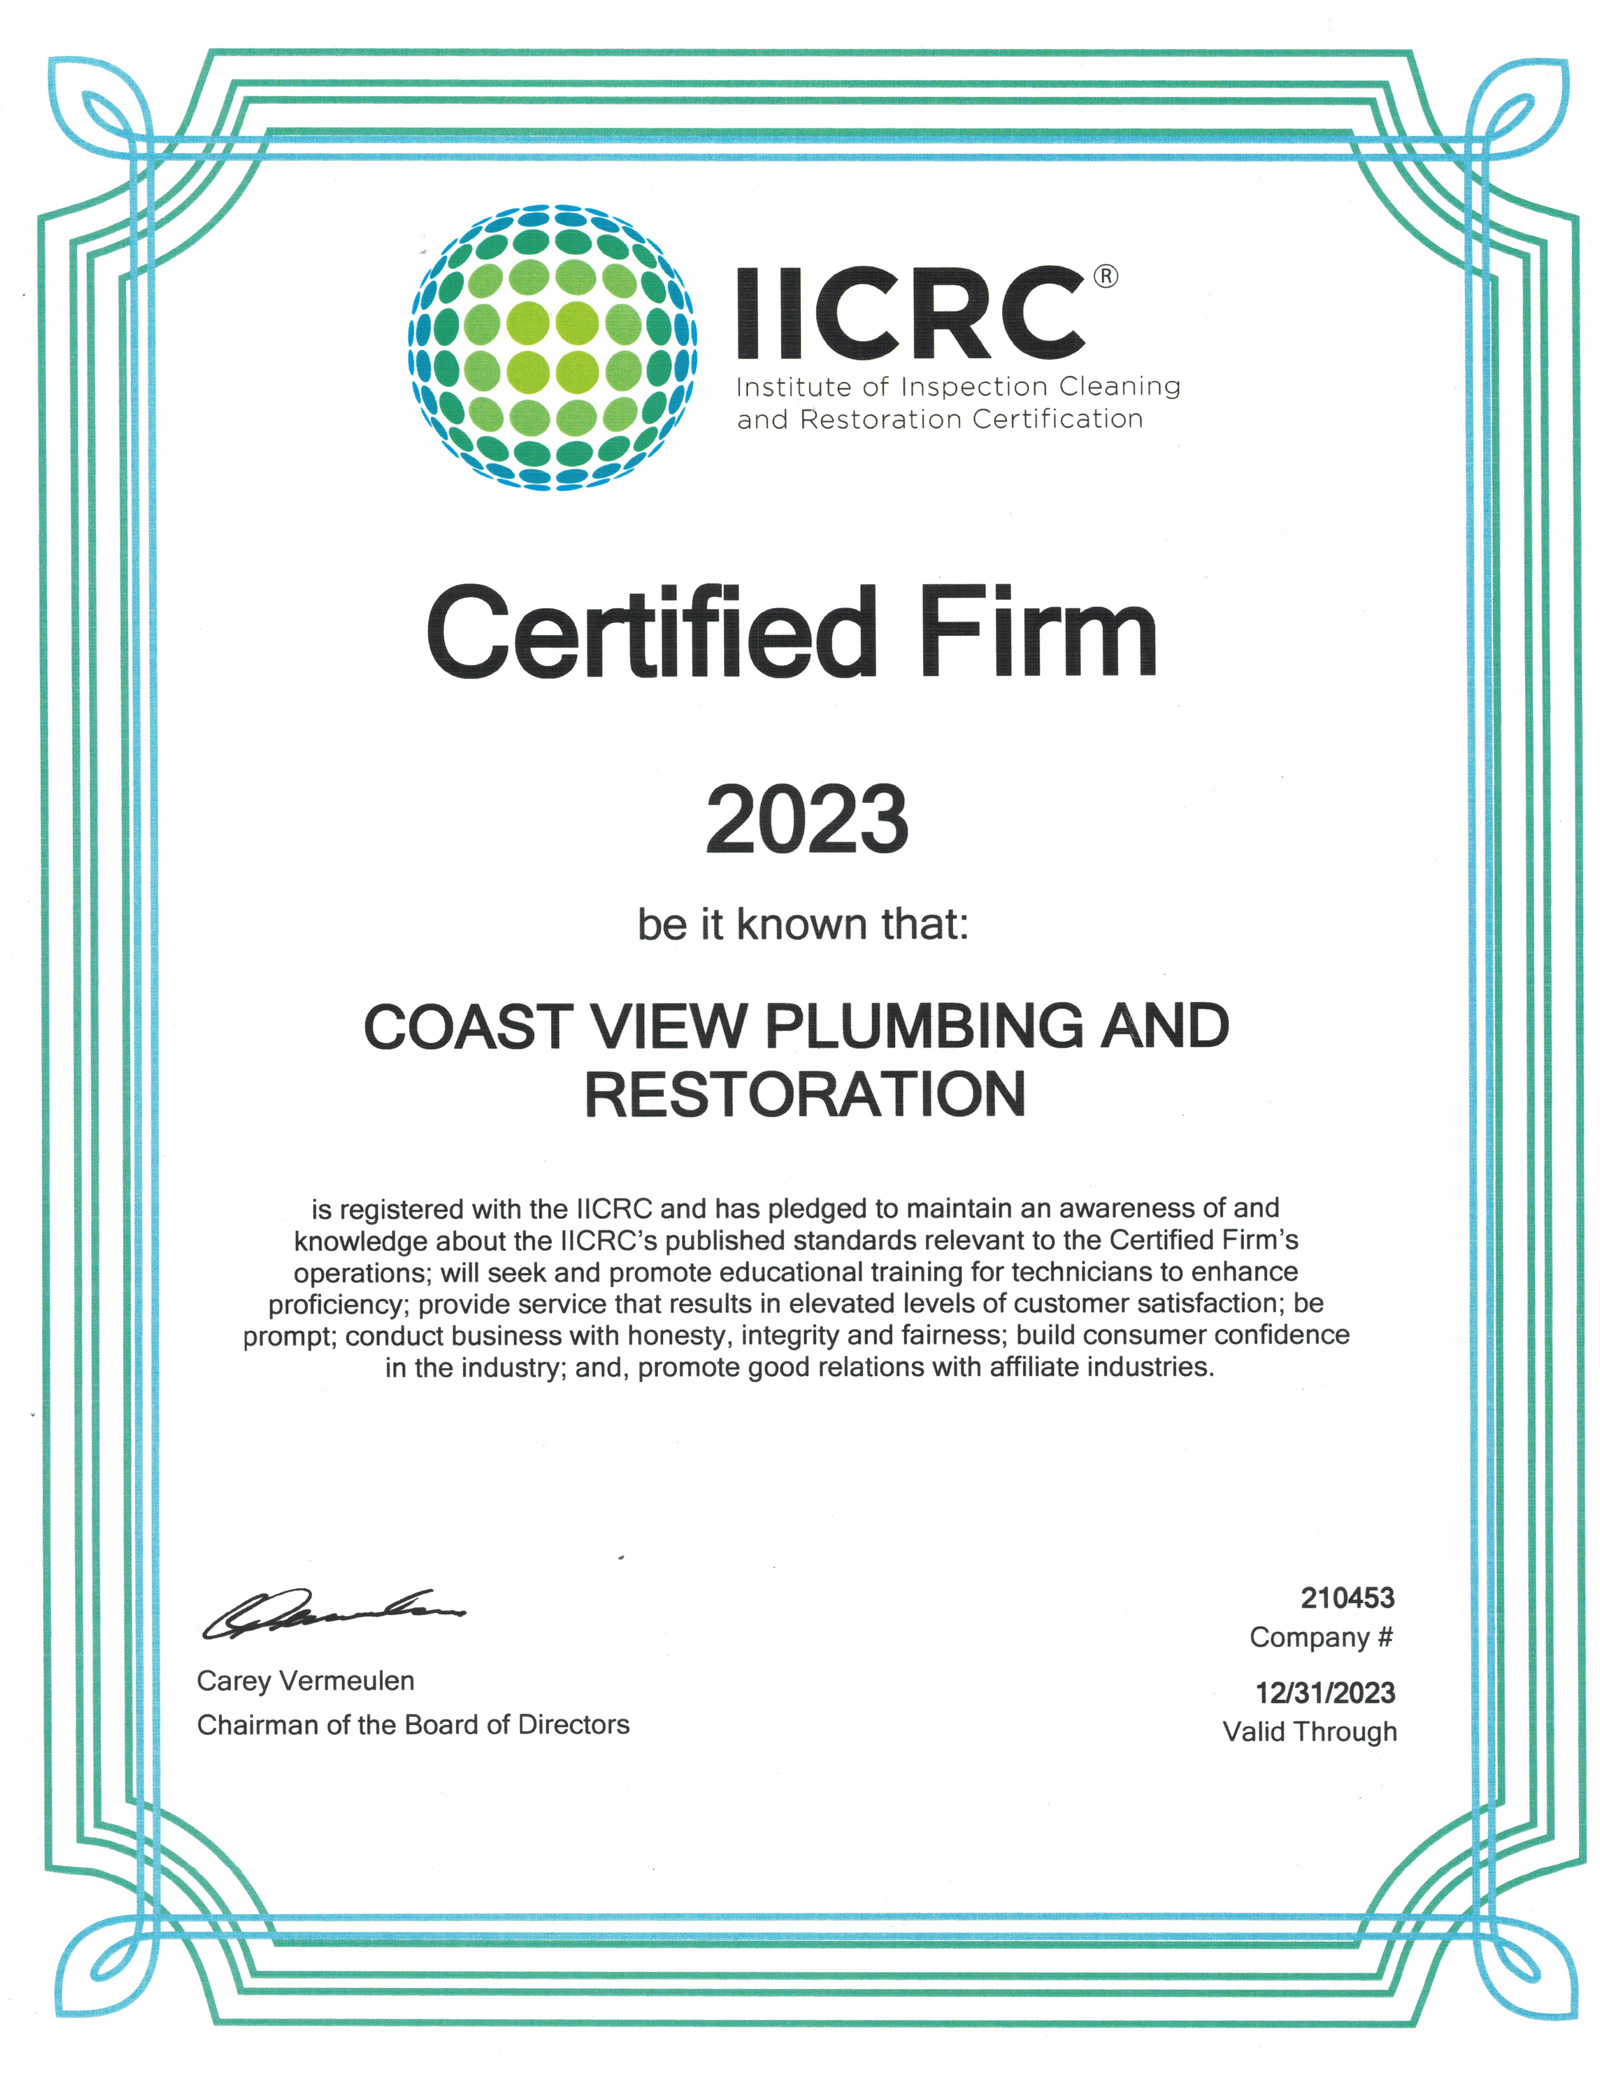 IICRC | Coast View Plumbing and Restoration